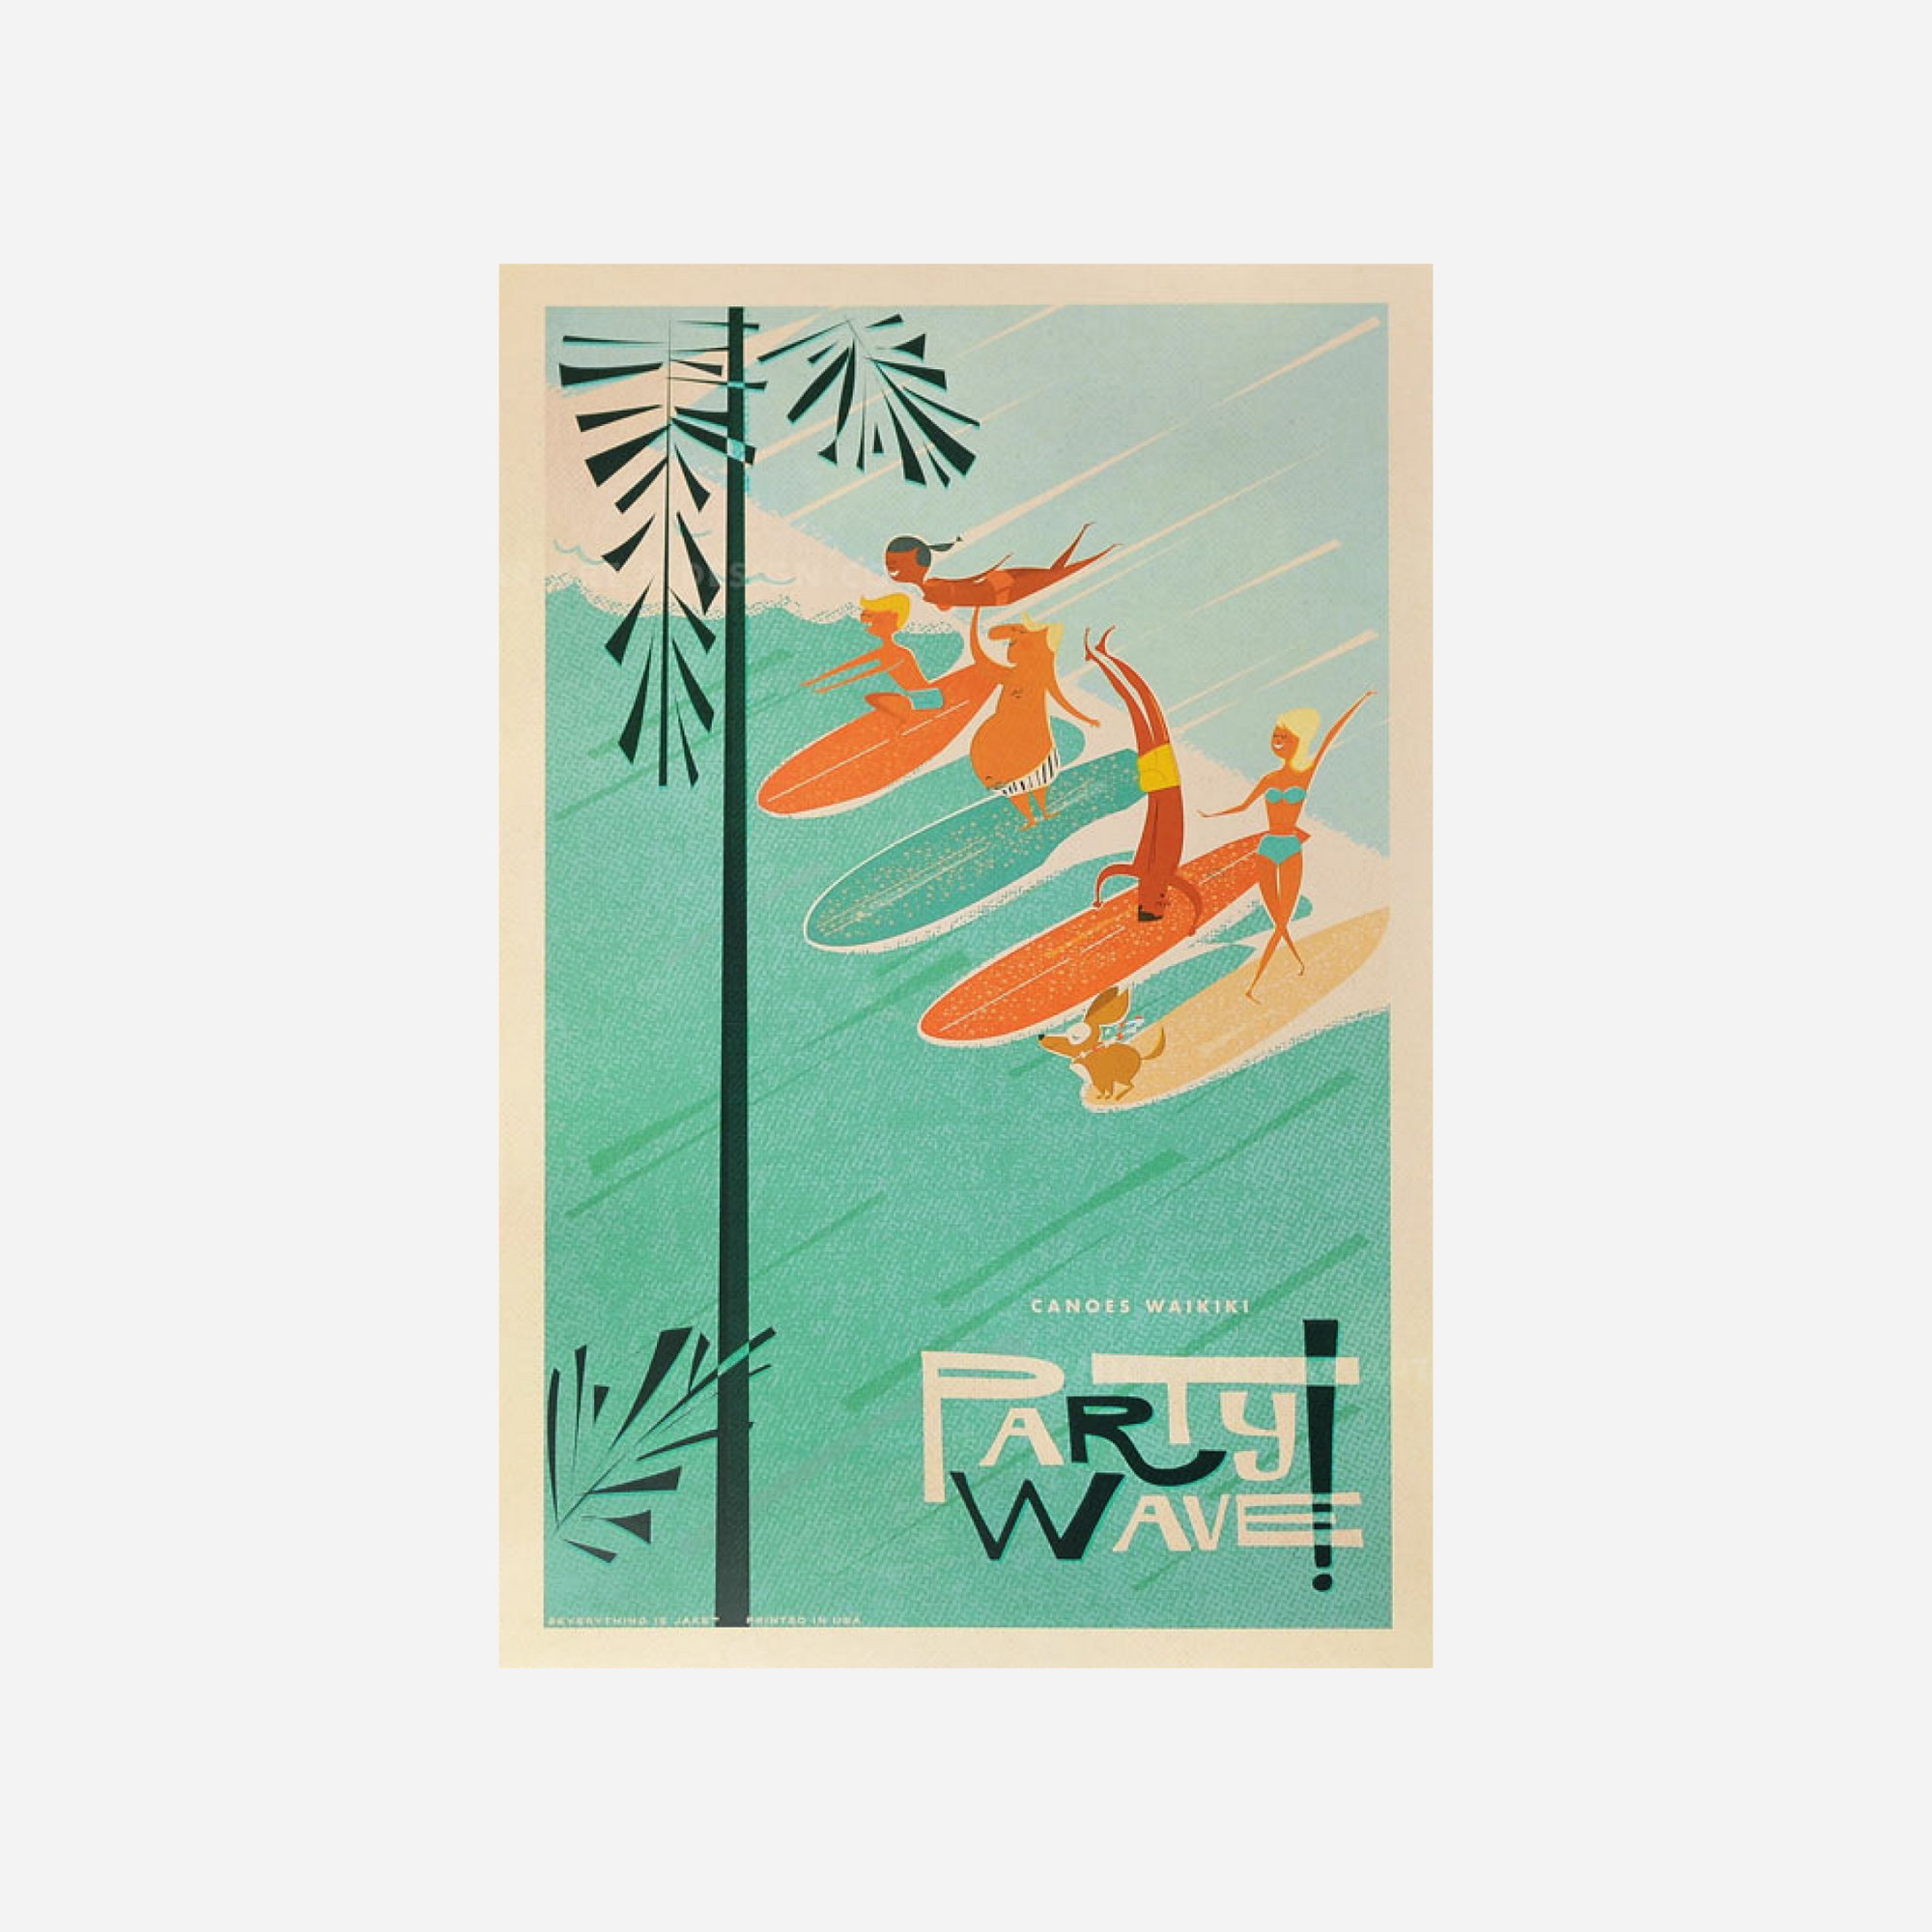 Nick Kuchar Travel Poster - Canoes Waikiki "Party Wave"